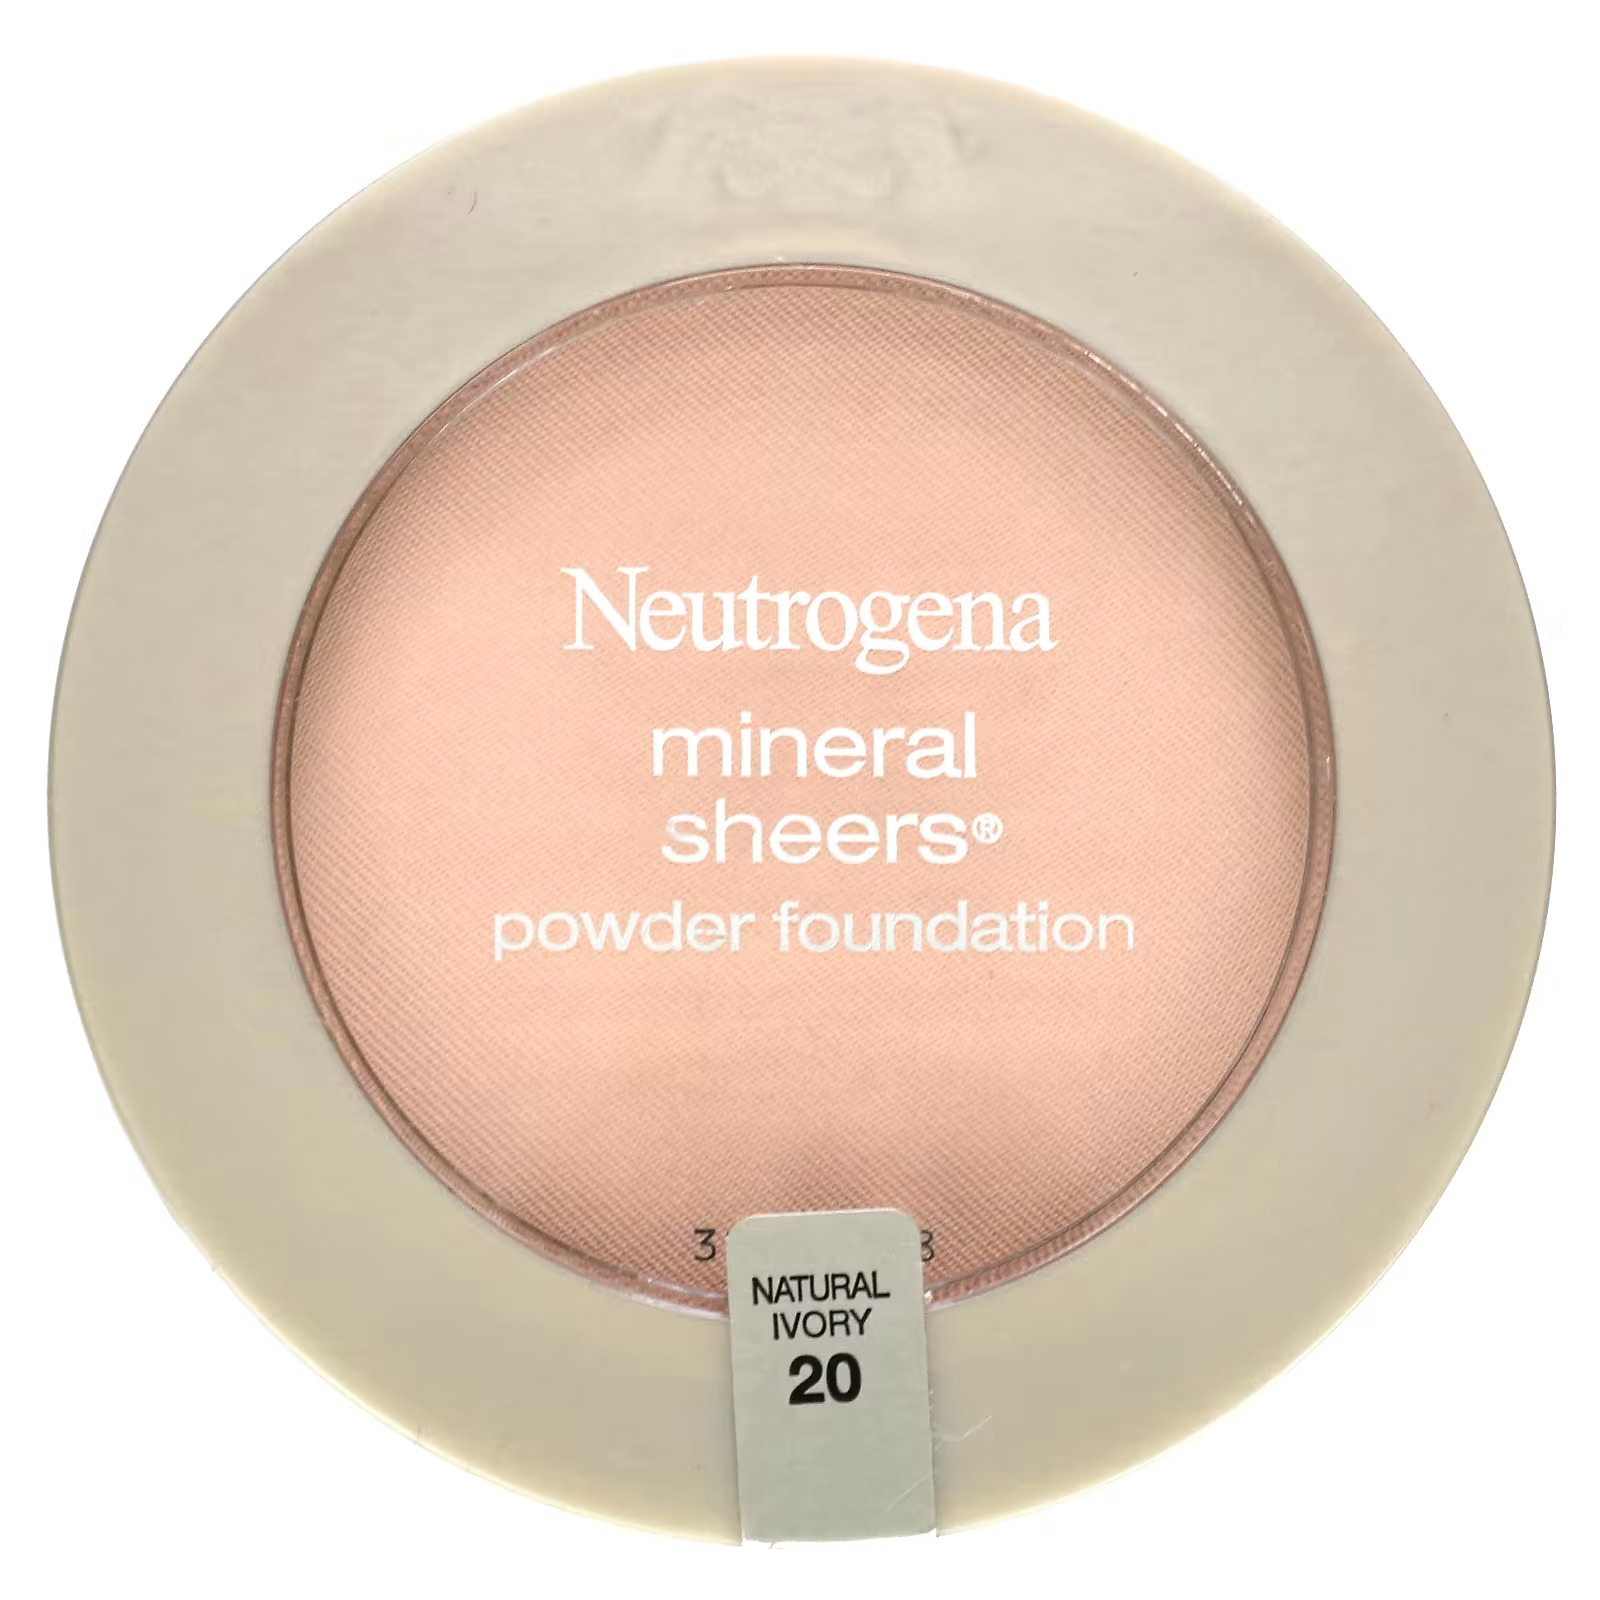 Neutrogena Mineral Sheers Powder Foundation Natural Ivory 20 0,34 унции (9,6 г) neutrogena mineral sheers powder foundation buff 30 0 34 унции 9 6 г